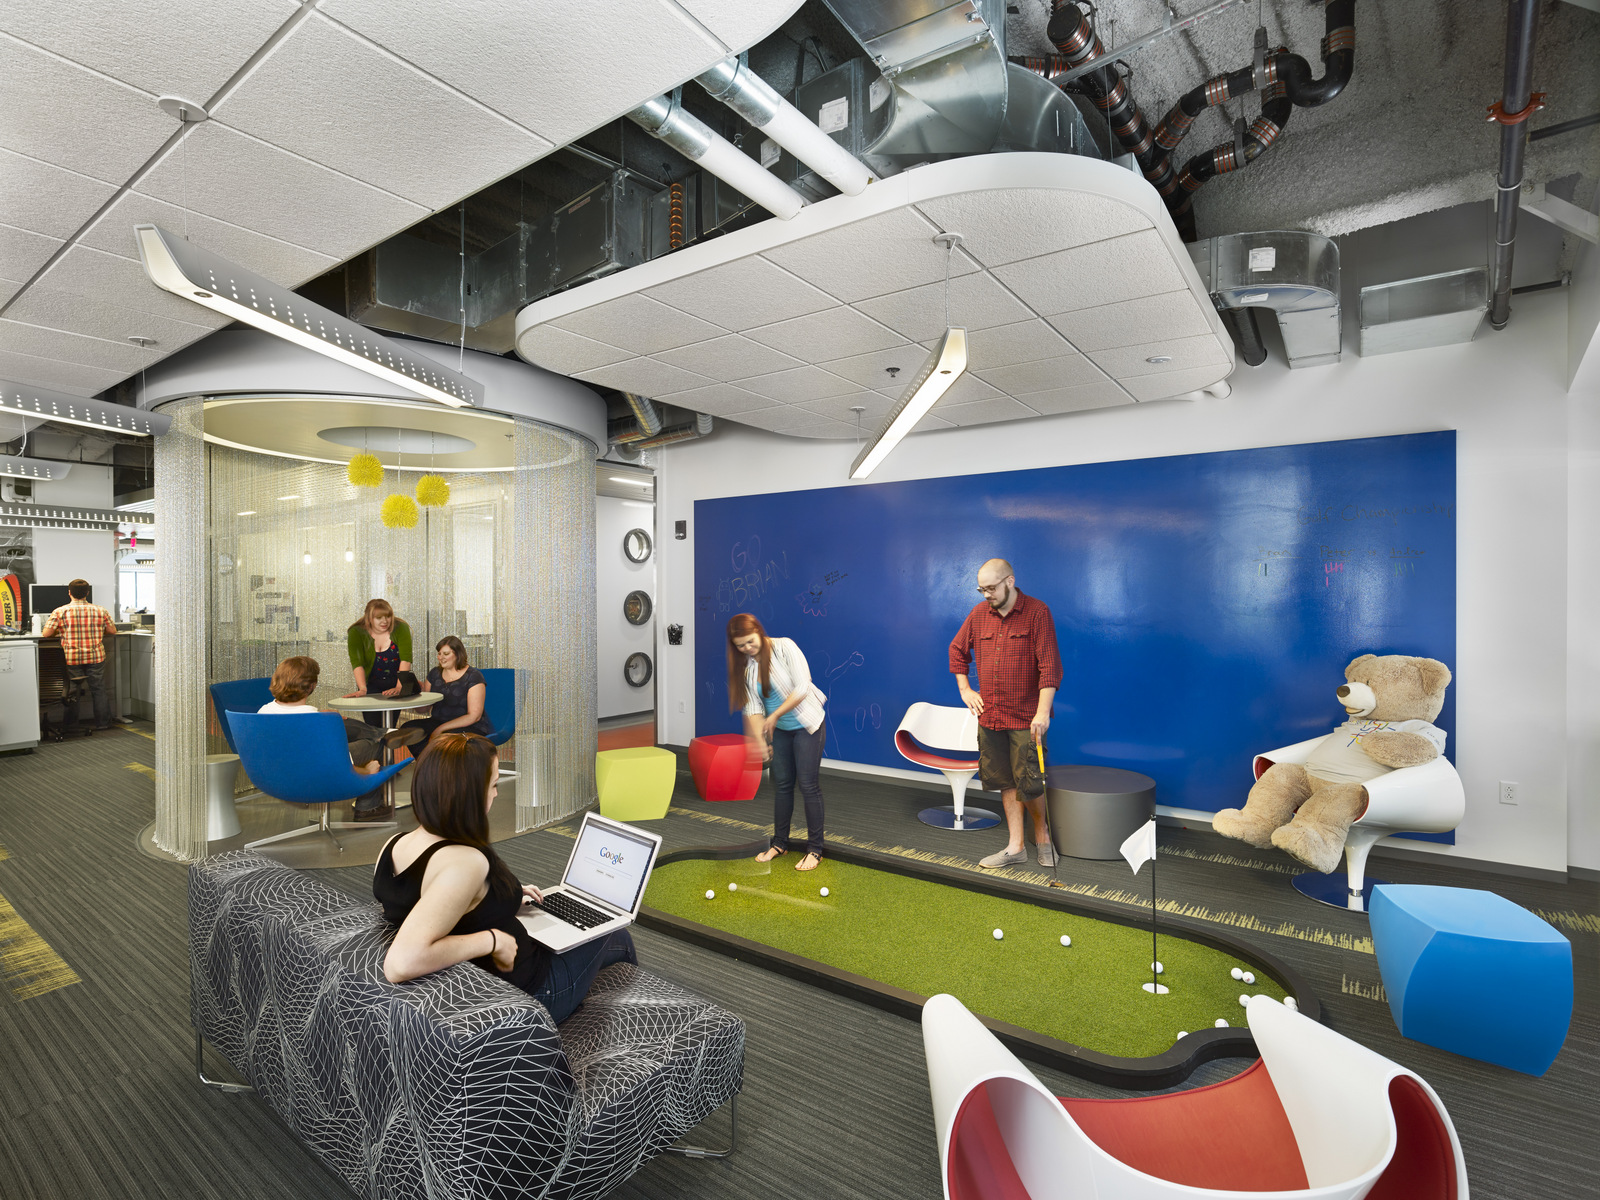 Google(グーグル)ケンブリッジのオフィス - マサチューセッツ州, ボストンのオープンスペース